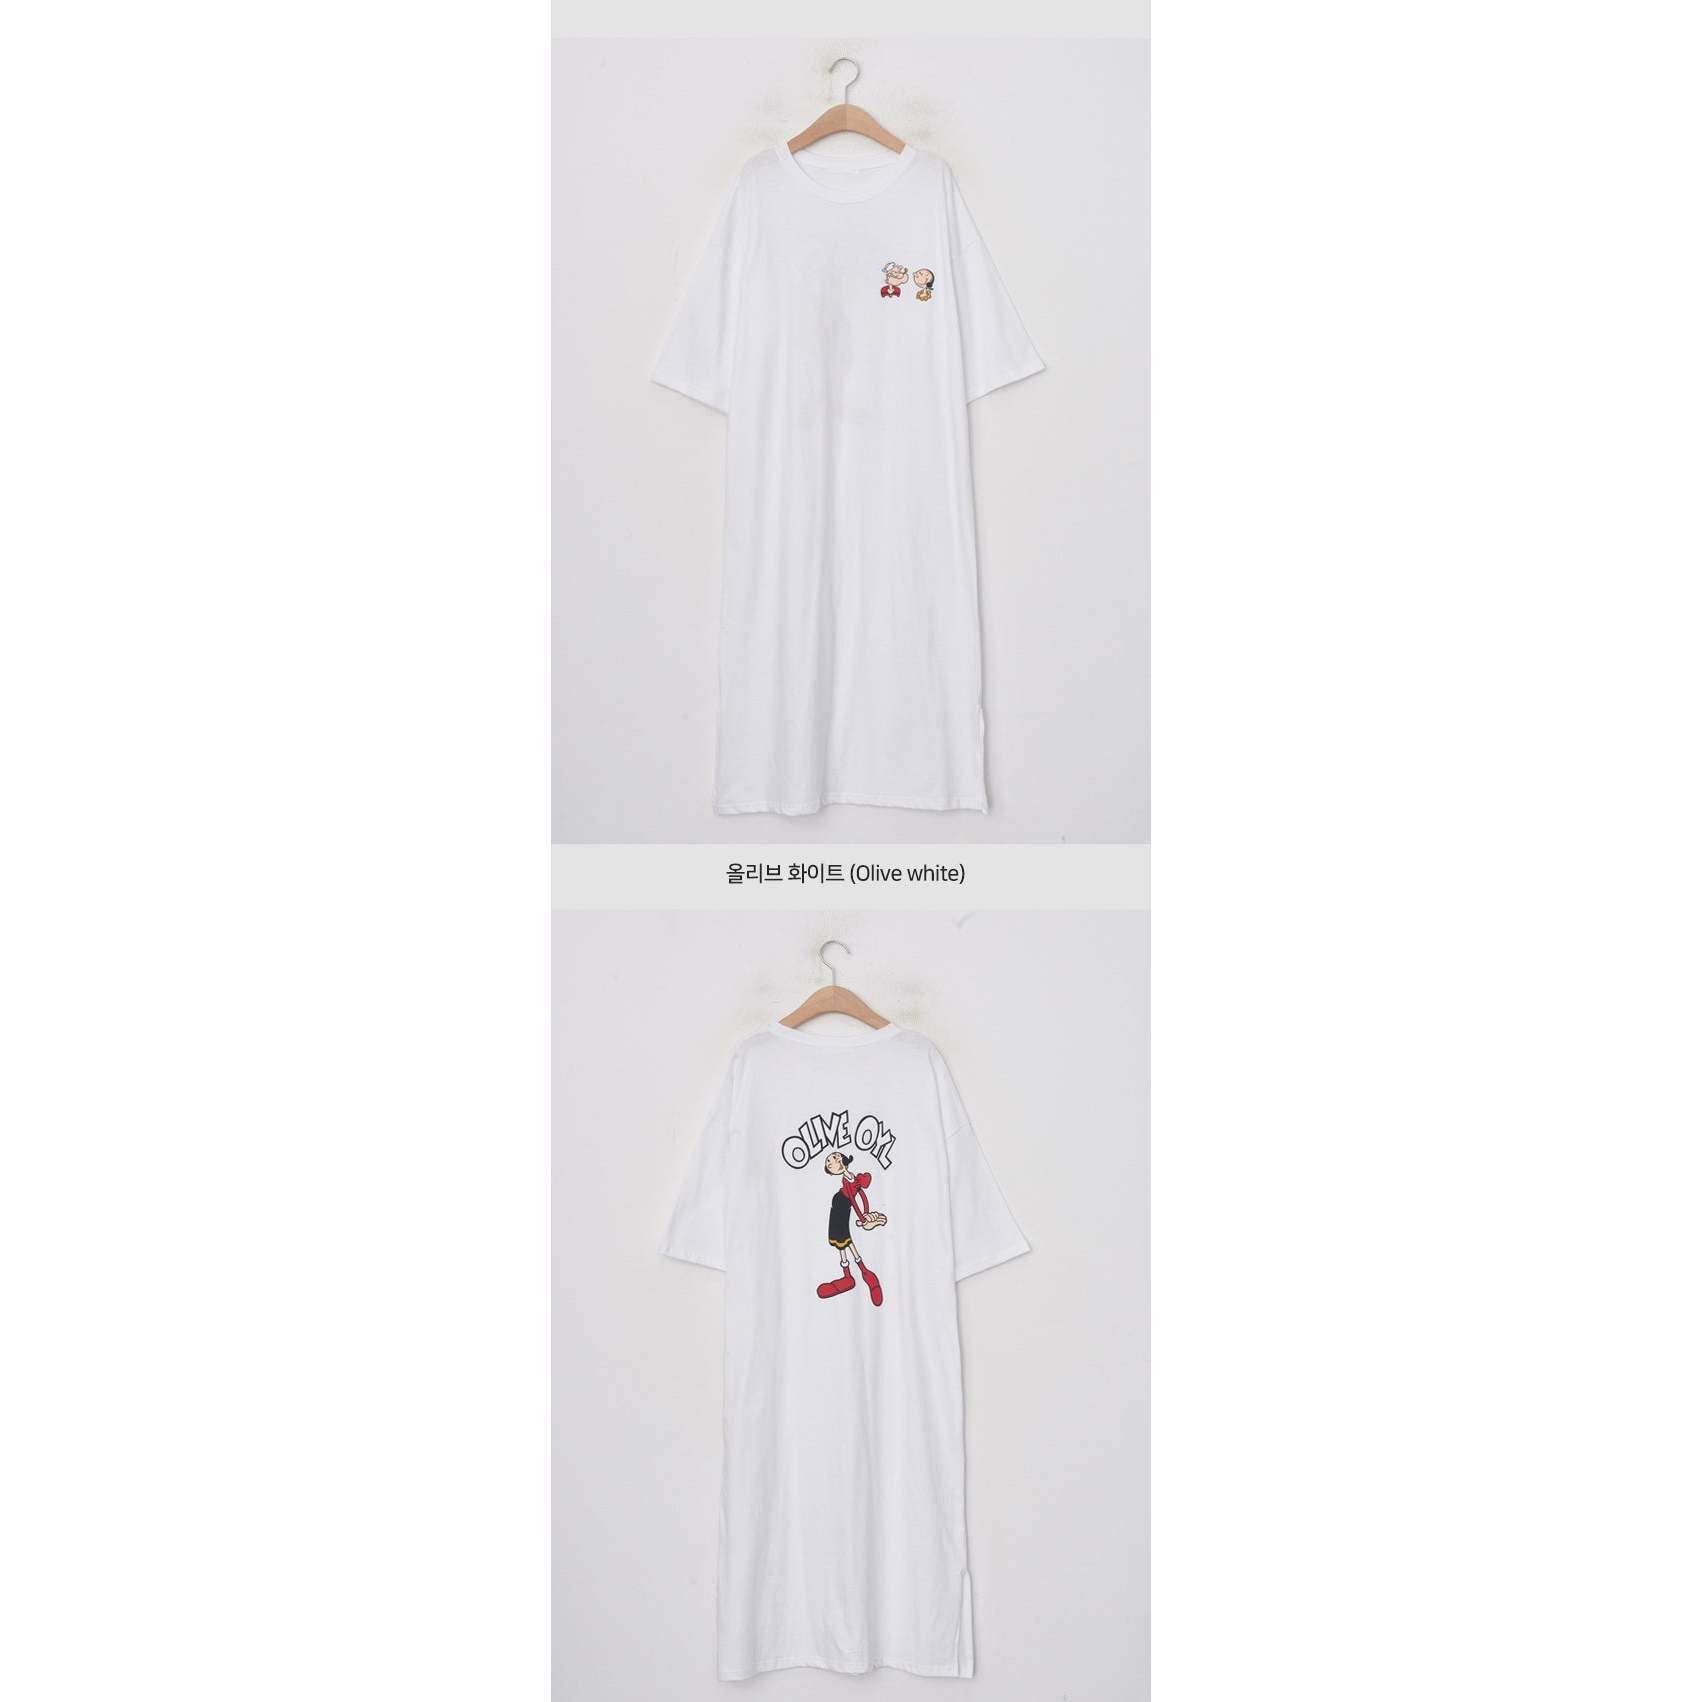 MUMMY.cc:夏季純棉短袖T恤長裙:One-piece (White)